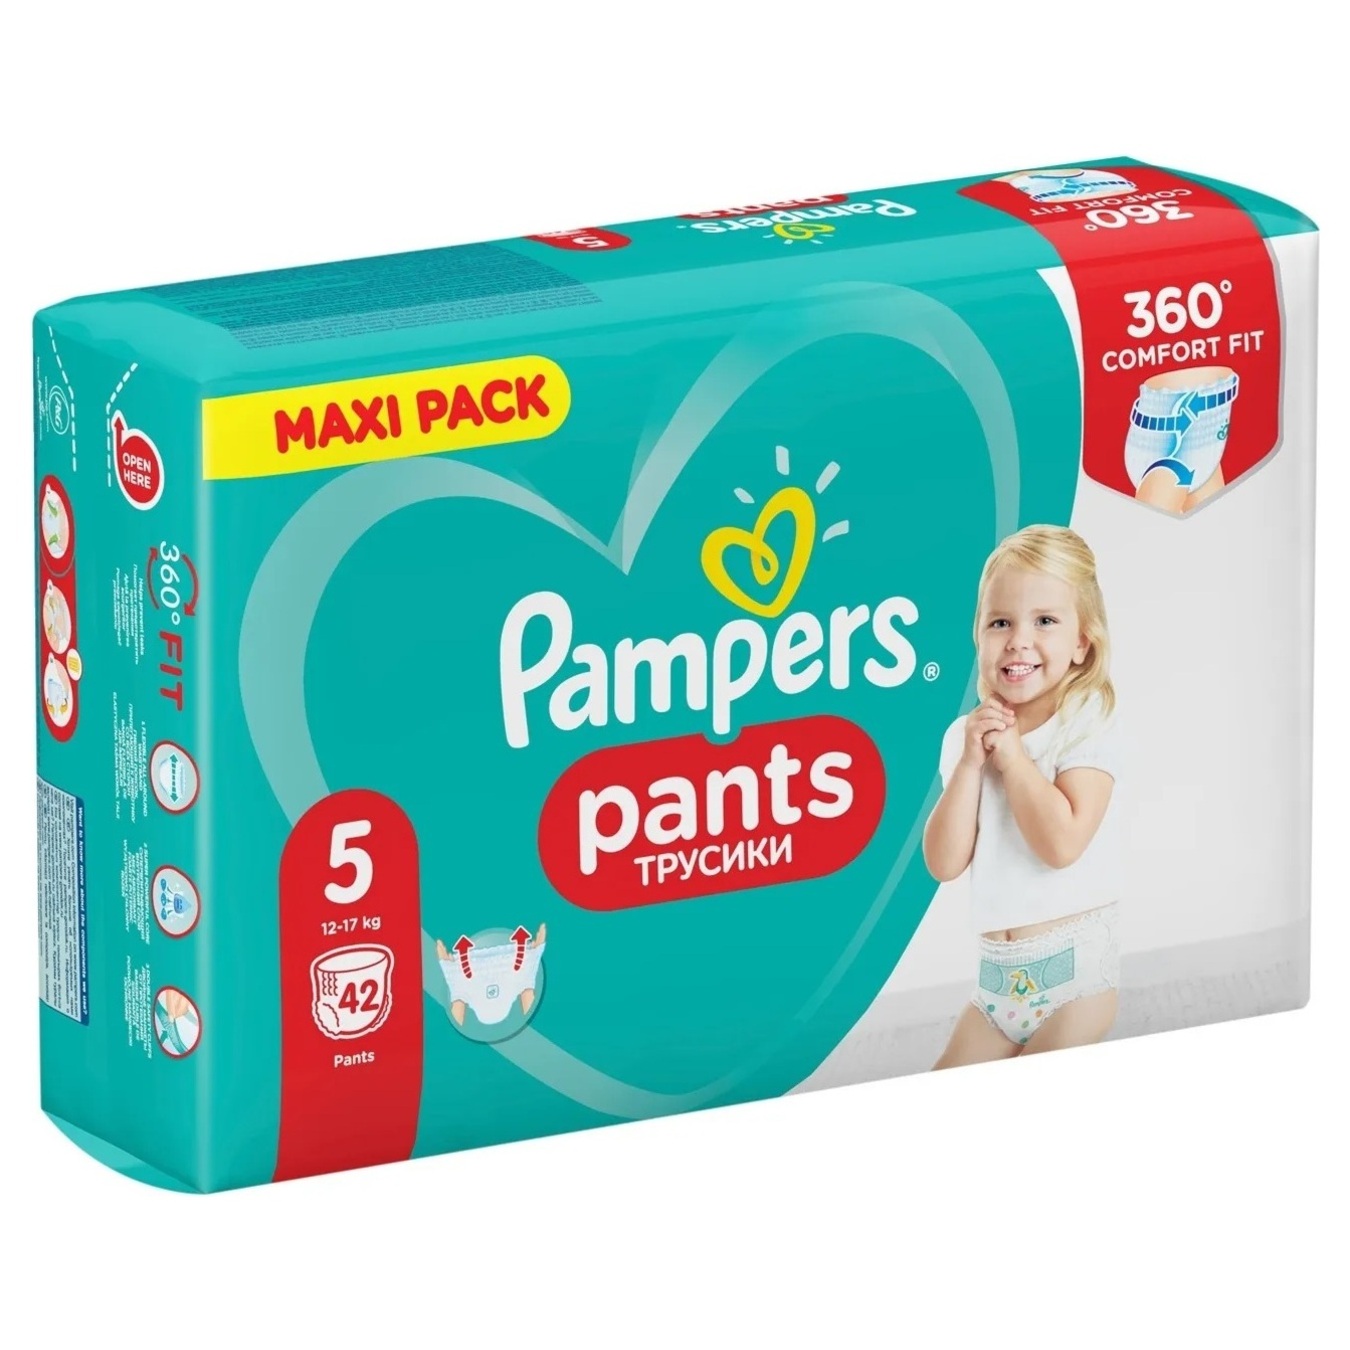 Pampers Diapers-panties Pants size 5 Junior 43070 kg 42 pcs 2